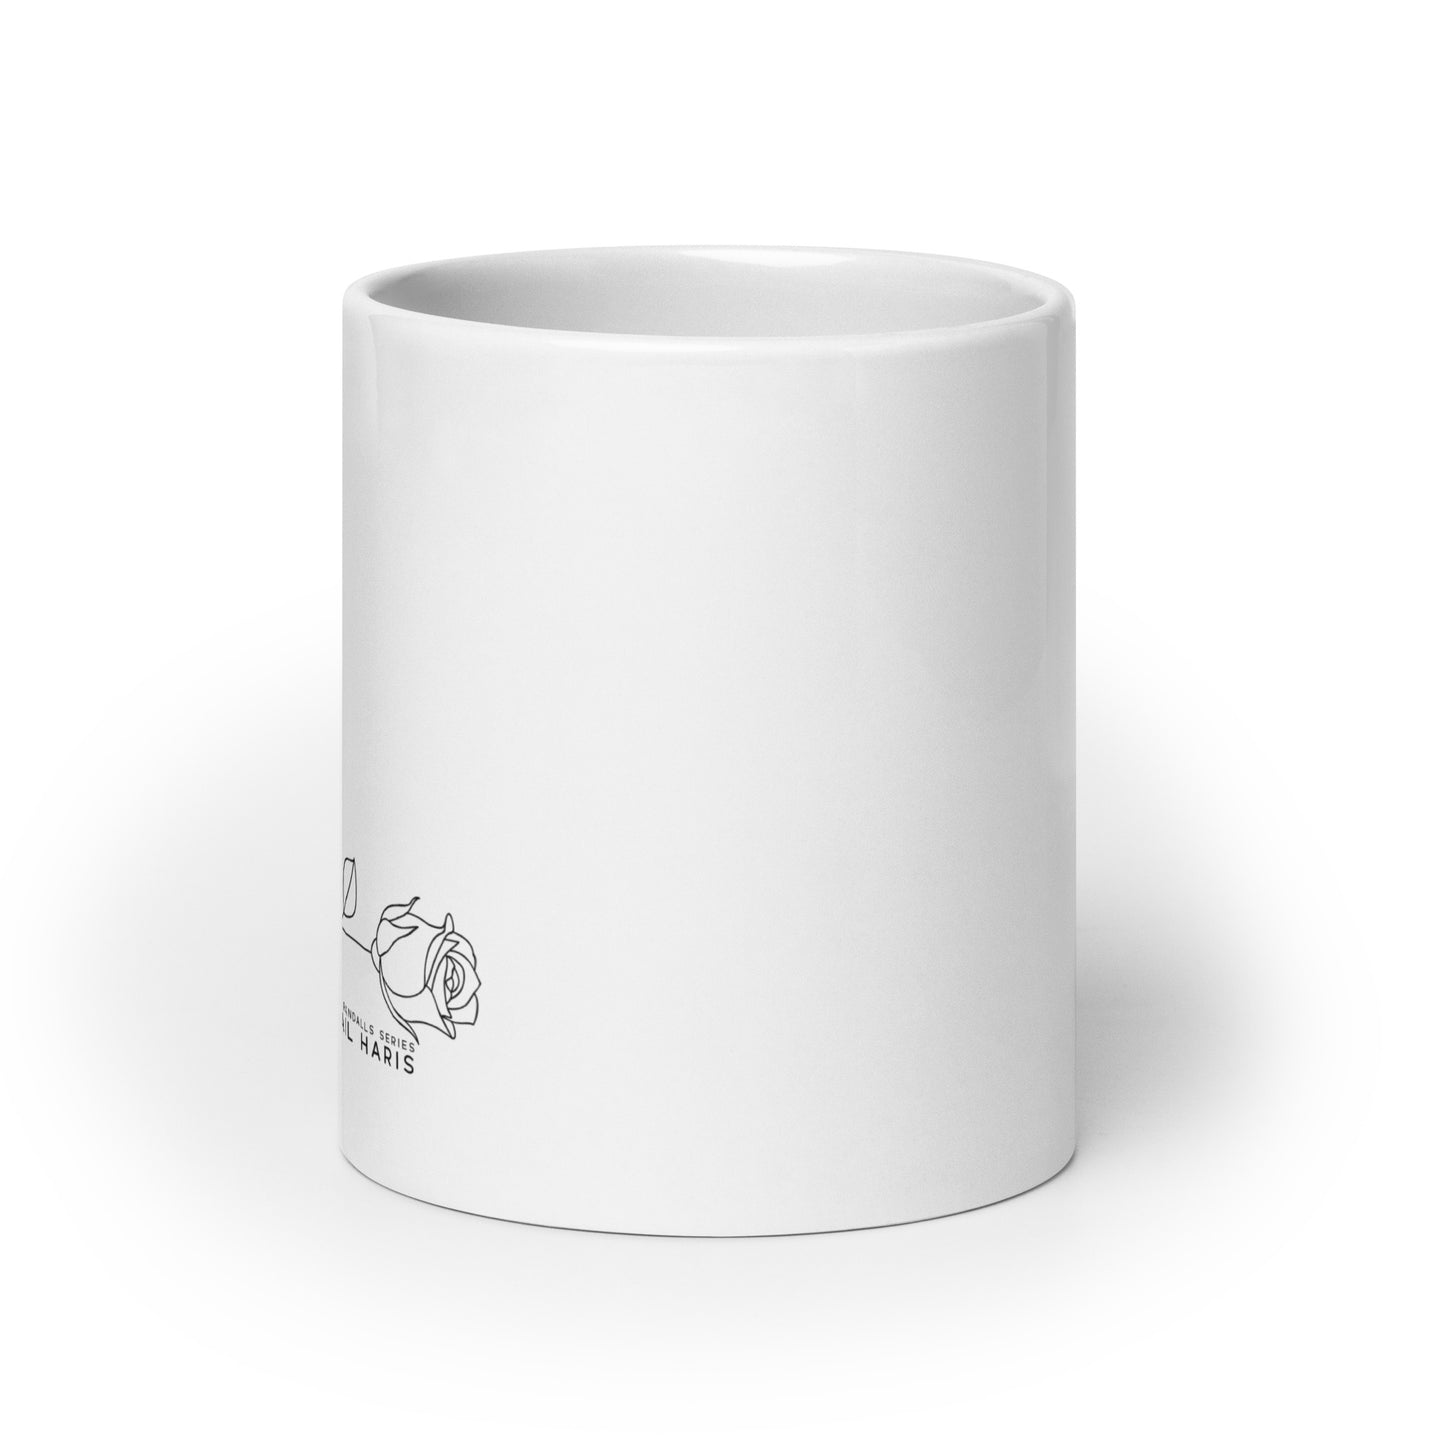 The Randall Series Rose White glossy mug